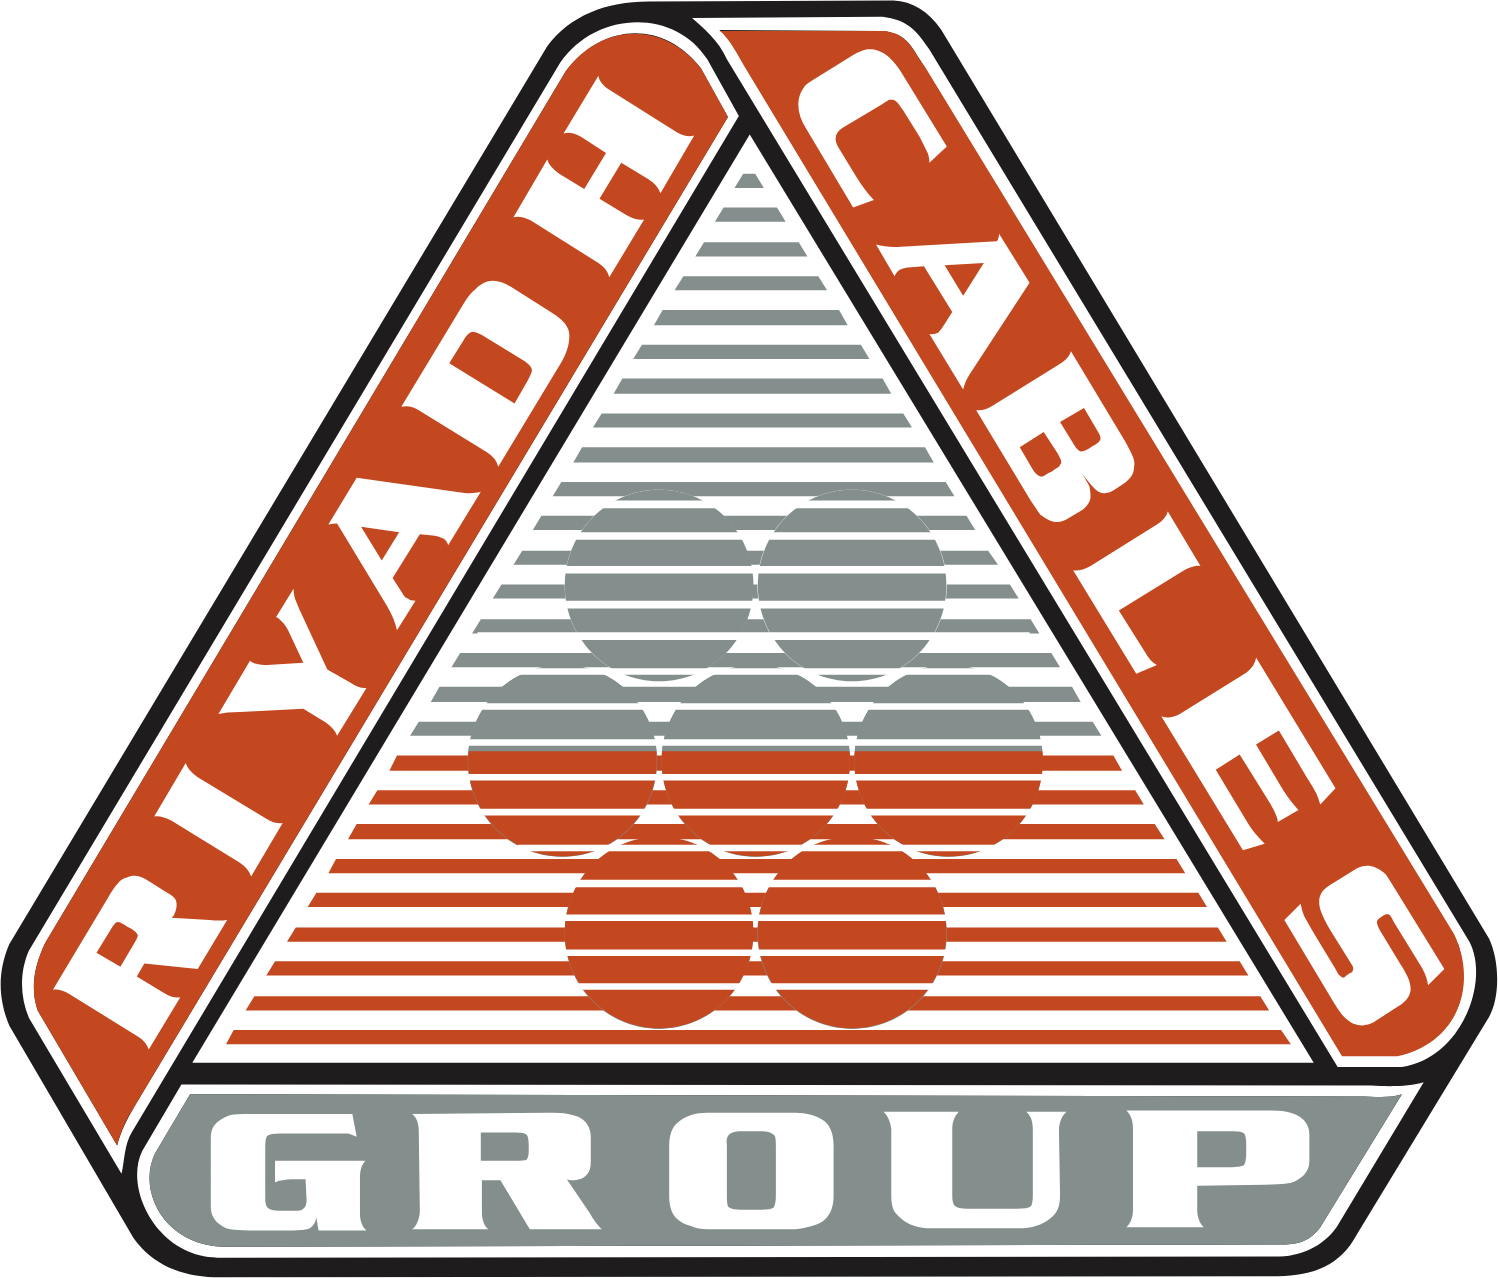 Riyadh Cables Group Company logo (PNG transparent)